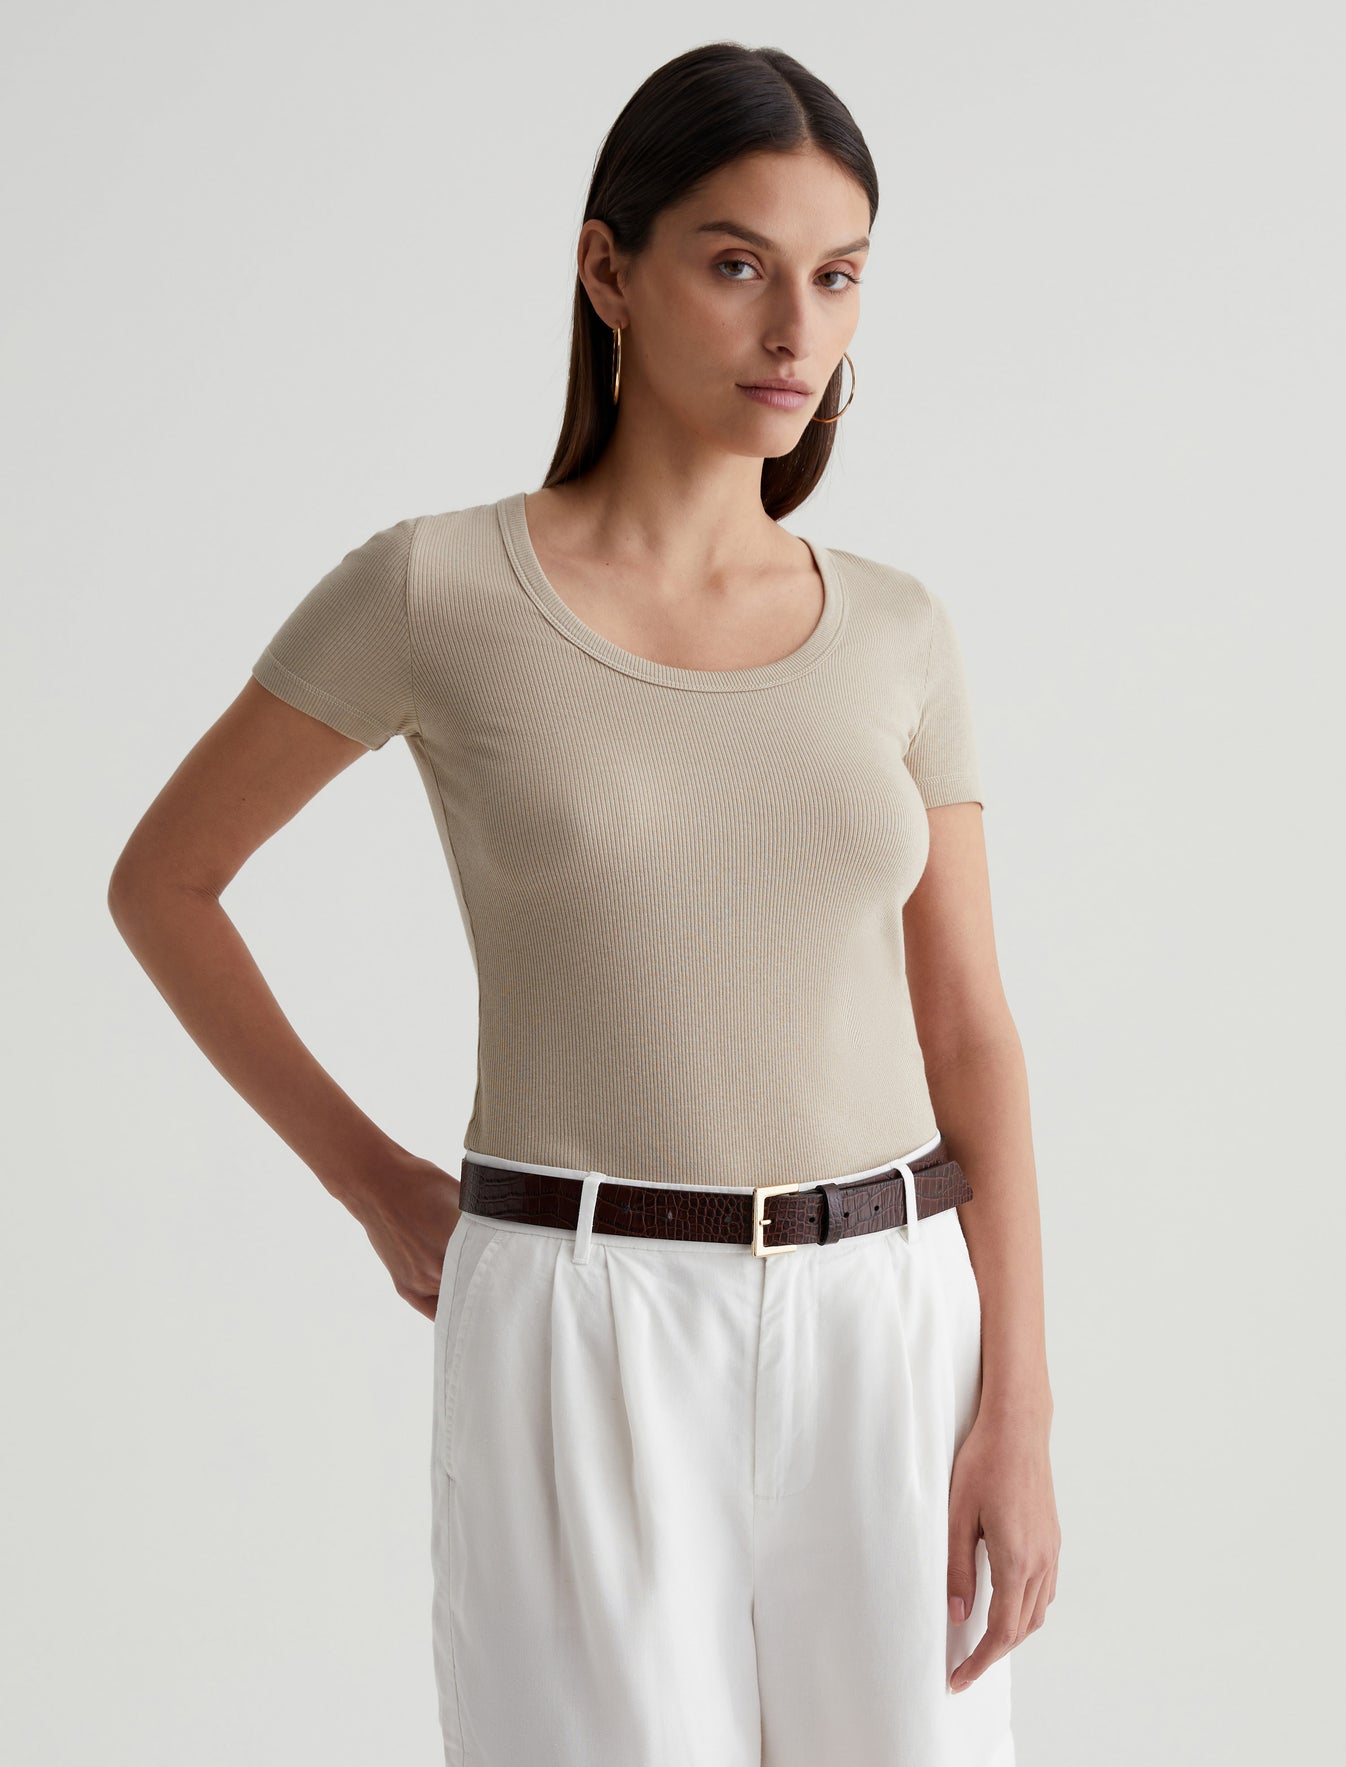 Jessie Top Flax Slim Short Sleeve Scoop Neck T-Shirt Women Top Photo 2